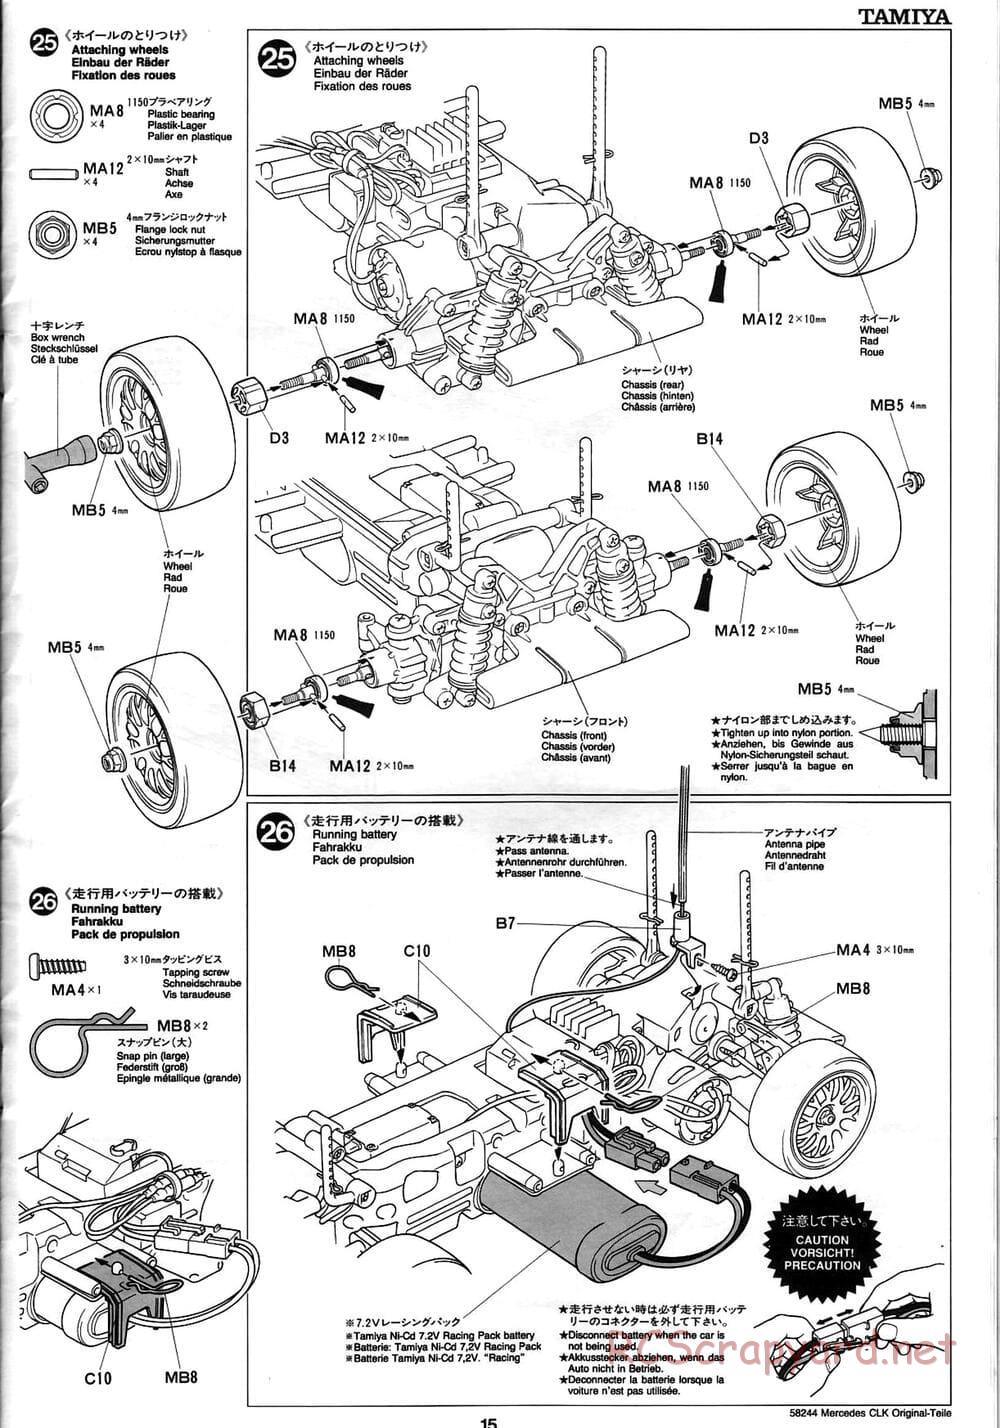 Tamiya - Mercedes CLK-GTR Original-Teile - TL-01 Chassis - Manual - Page 15